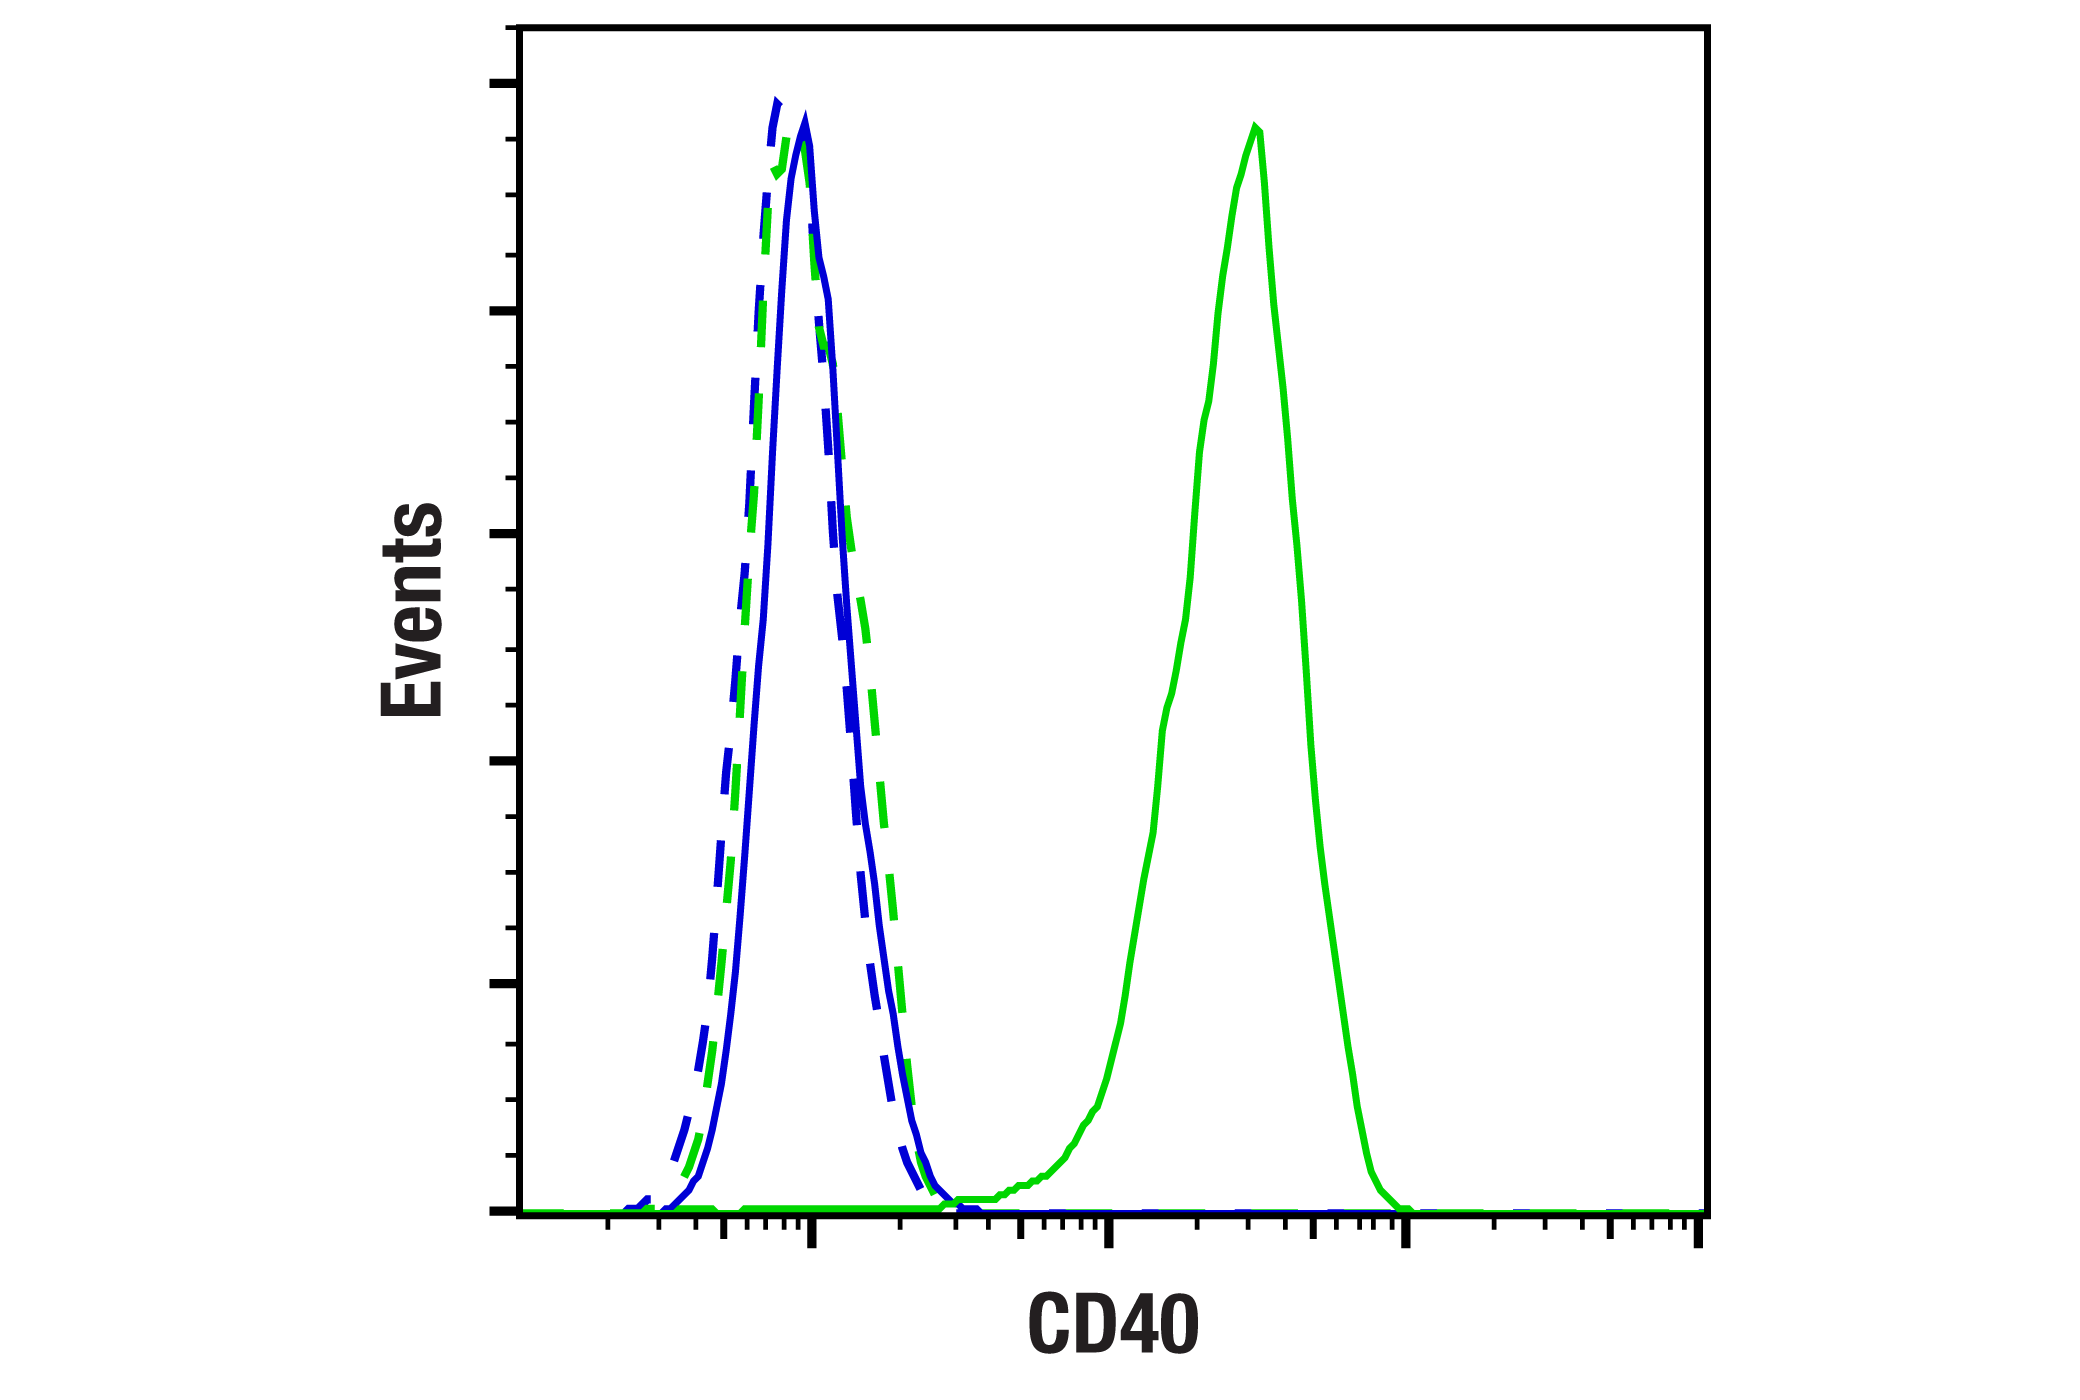  Image 1: CD40 (Selicrelumab Biosimilar) Human mAb